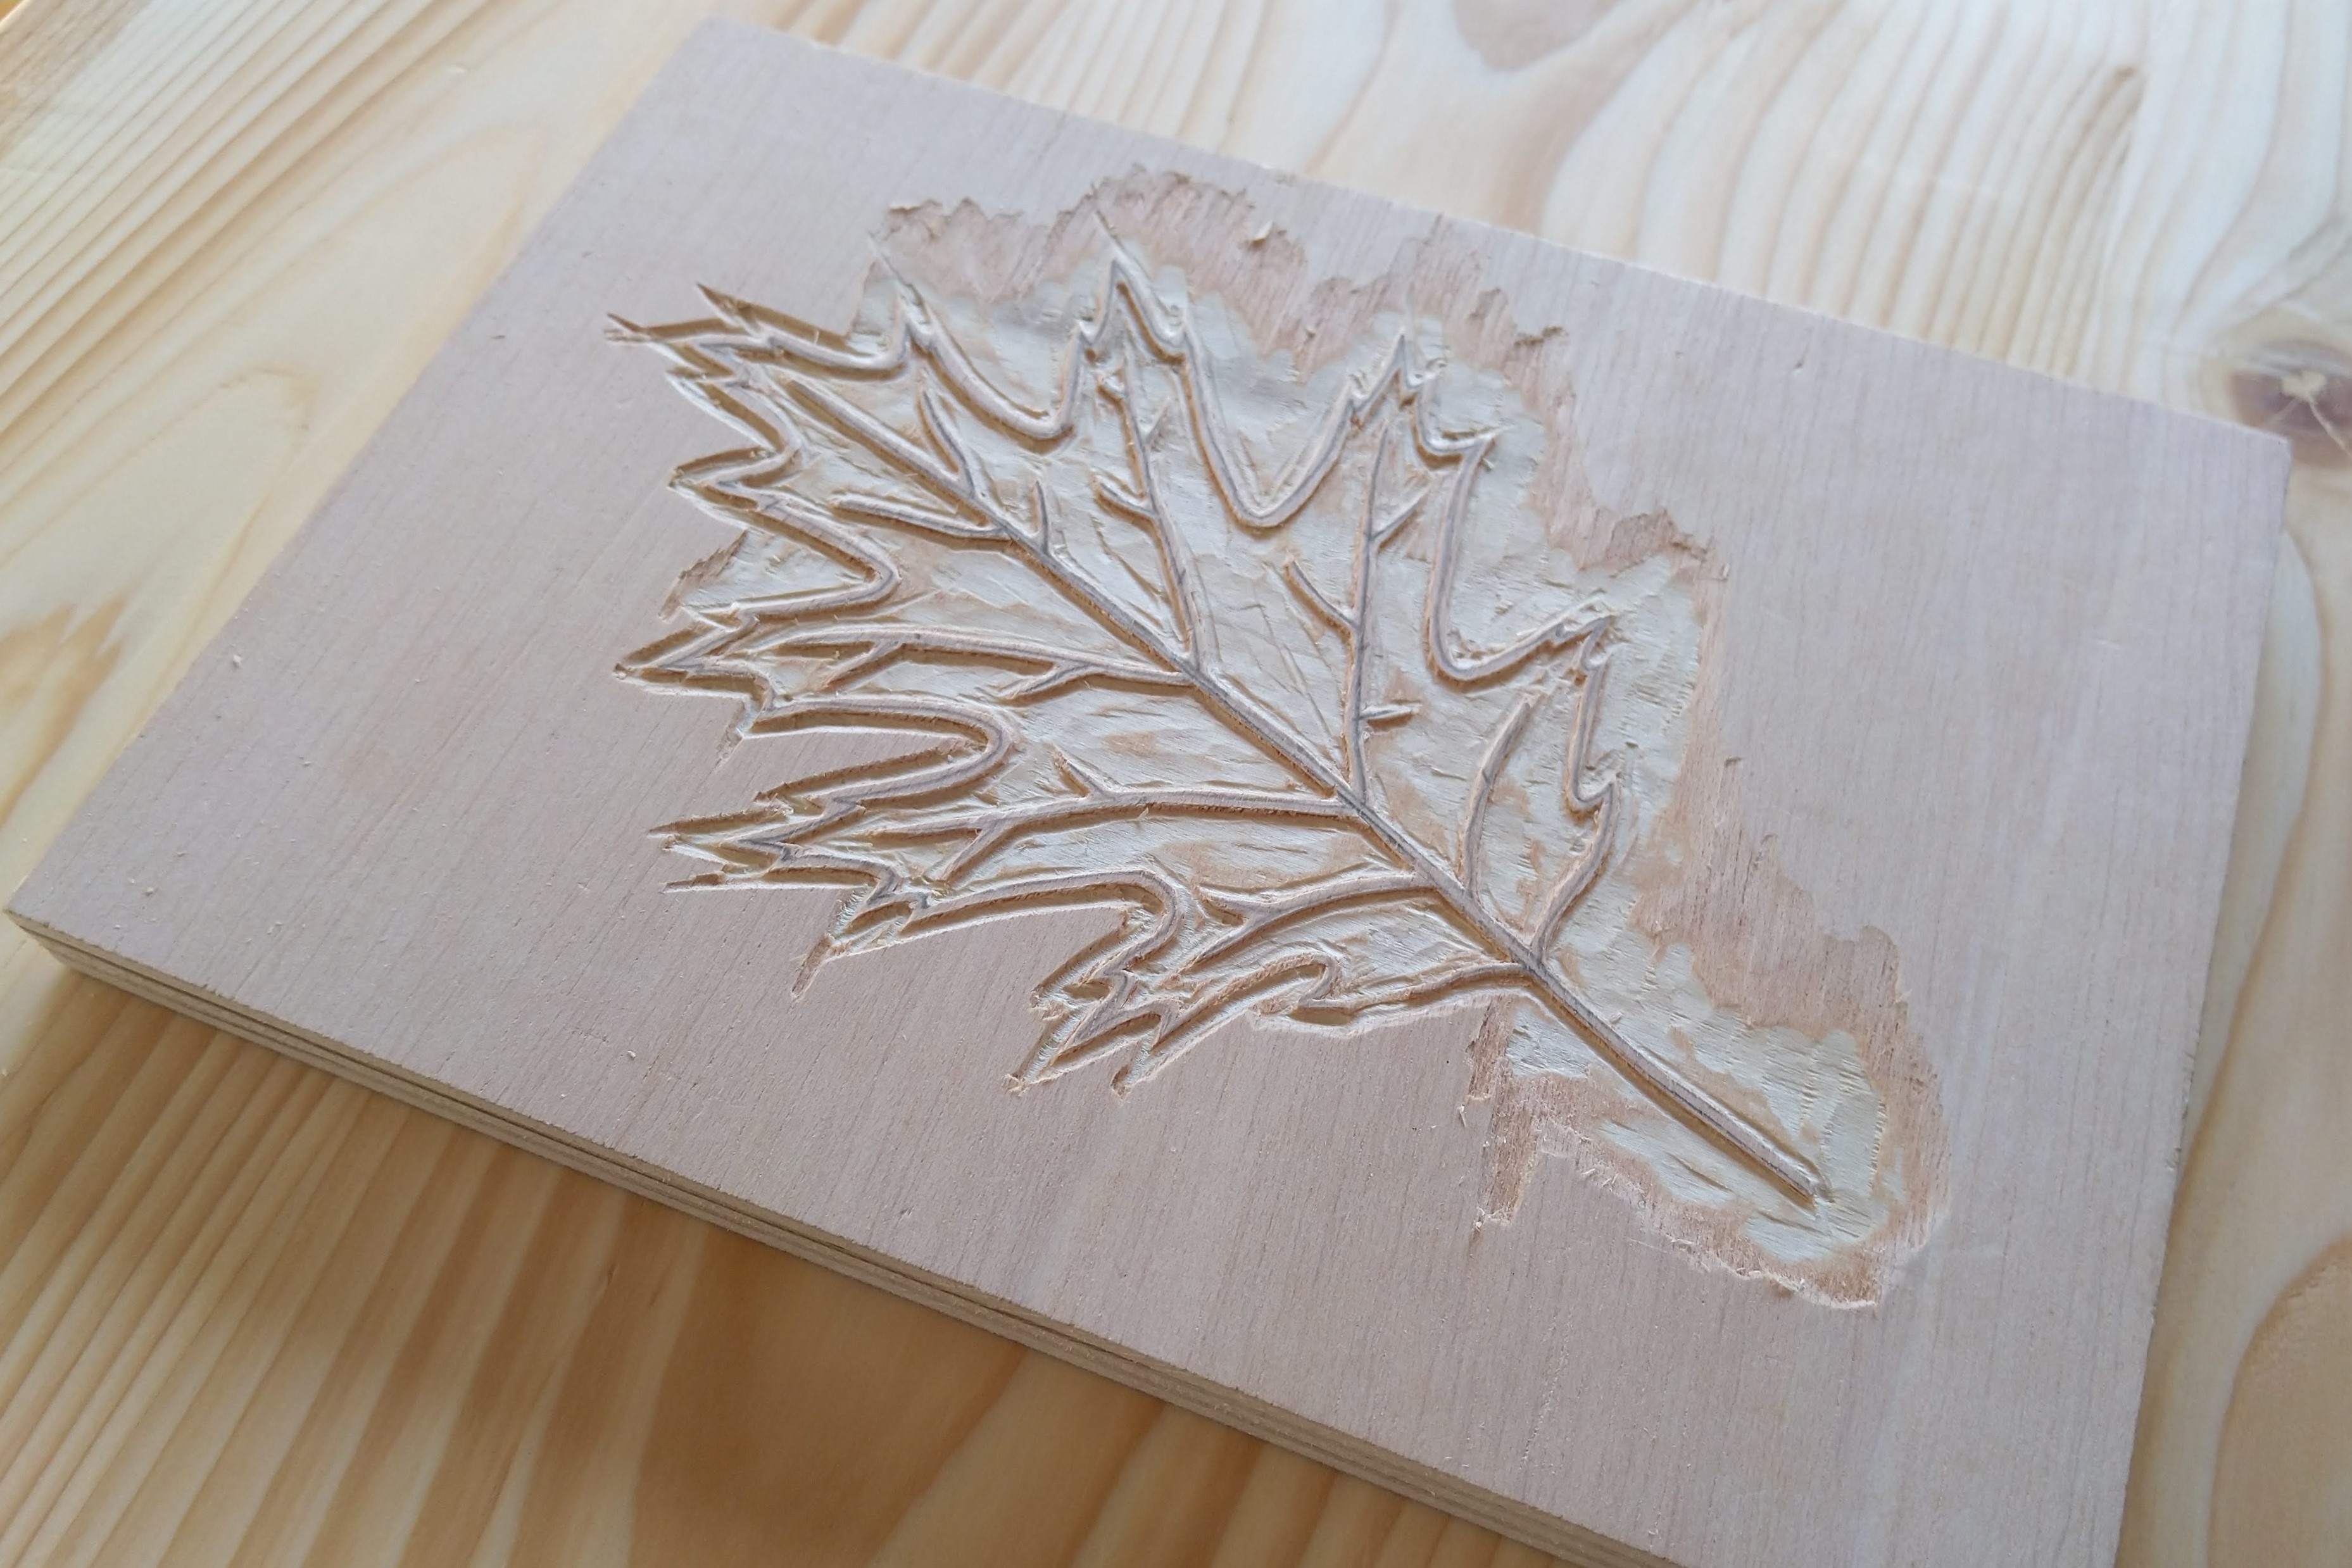 Plywood block leaf woodcut in progress